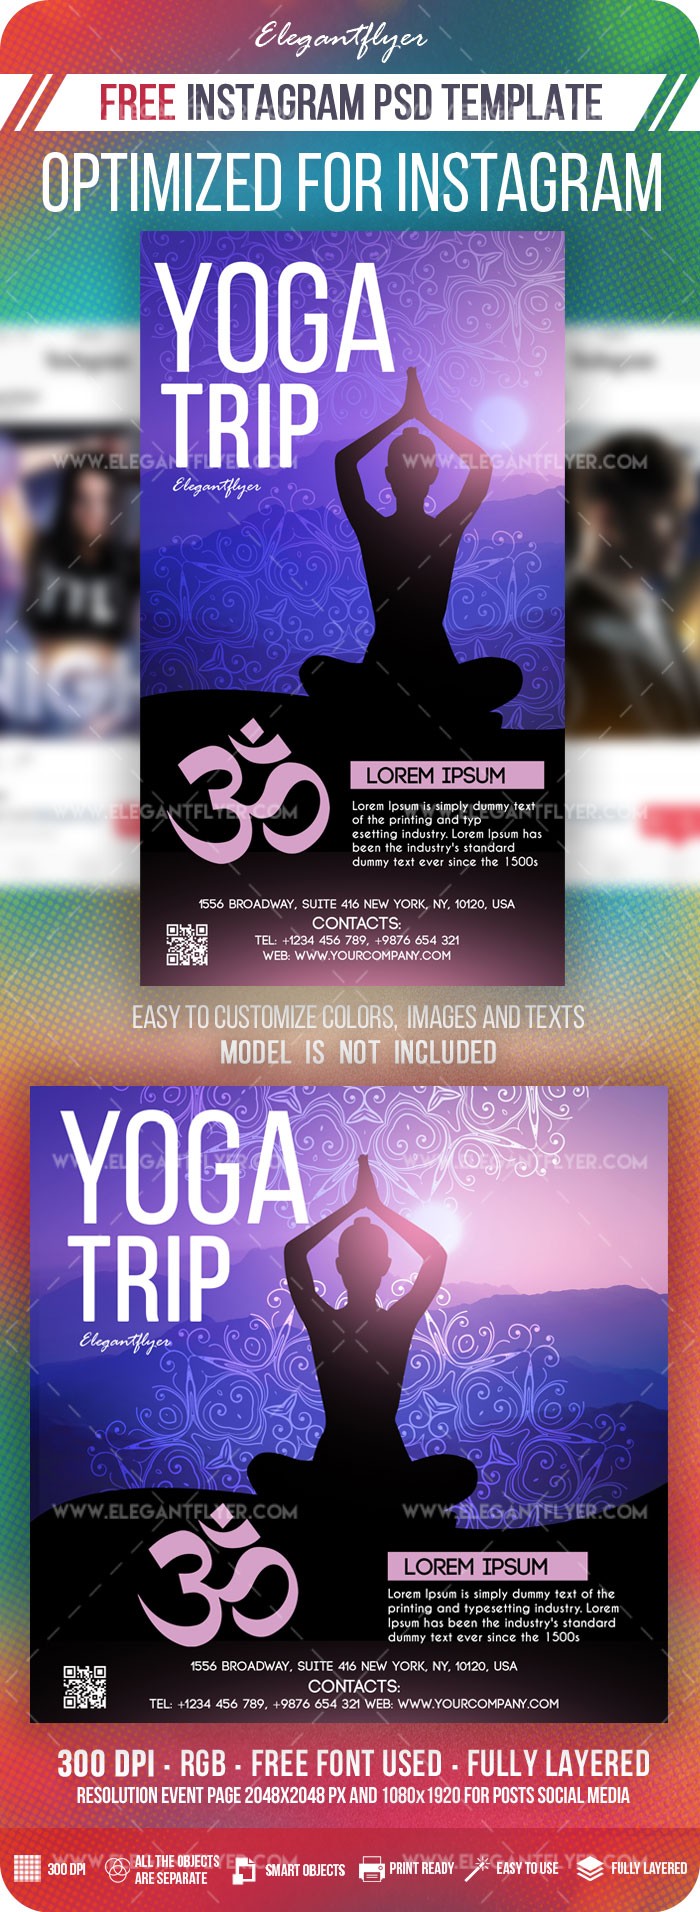 Voyage de Yoga Instagram by ElegantFlyer